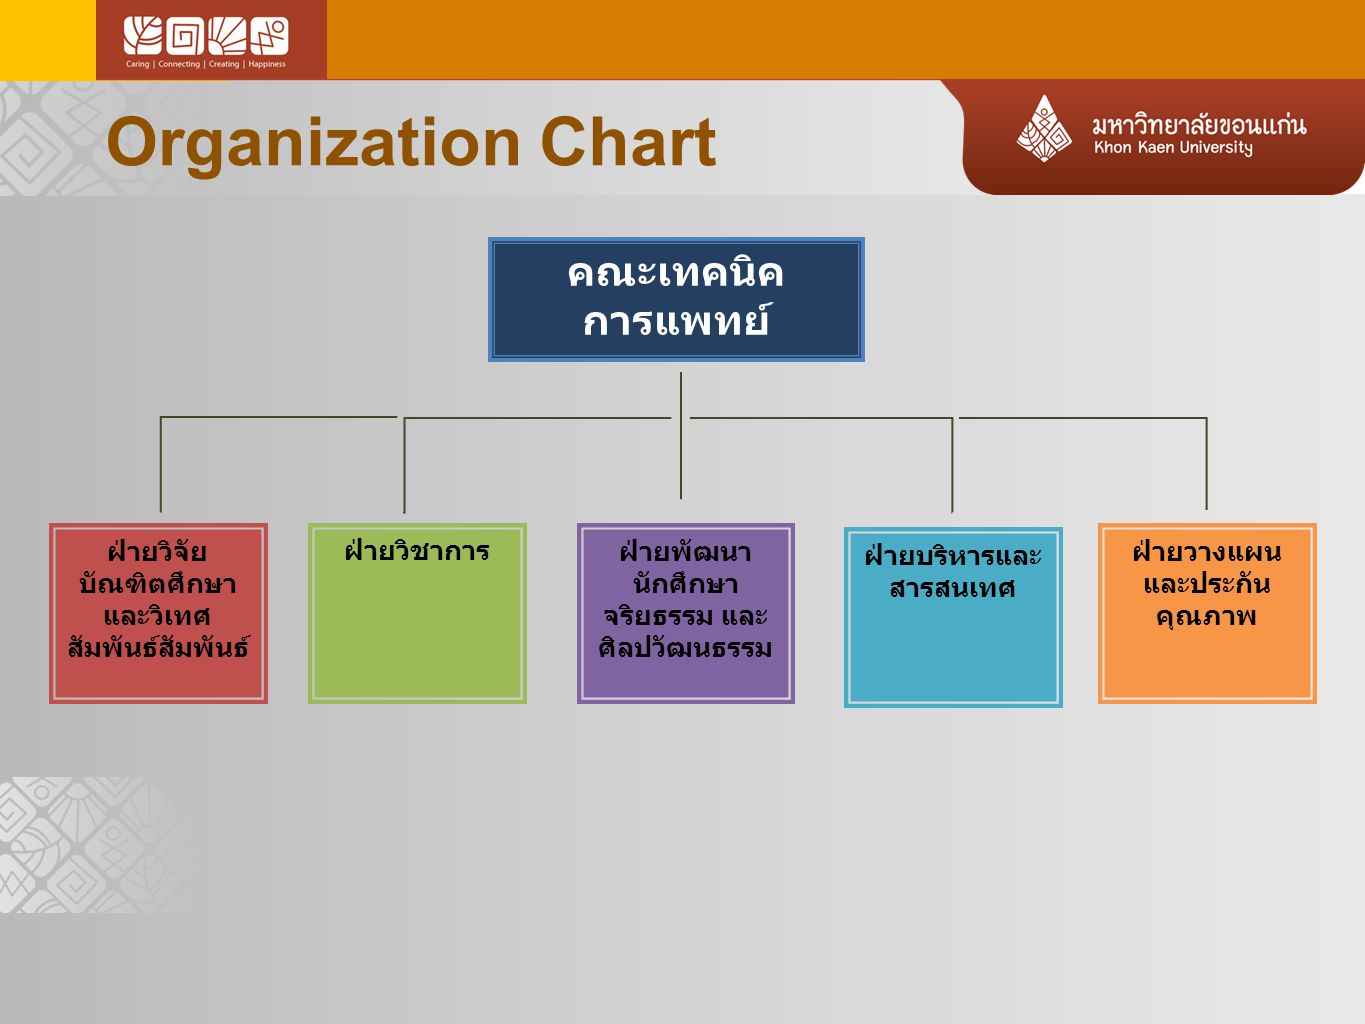 Organization Chart คณะเทคนิค การแพทย์